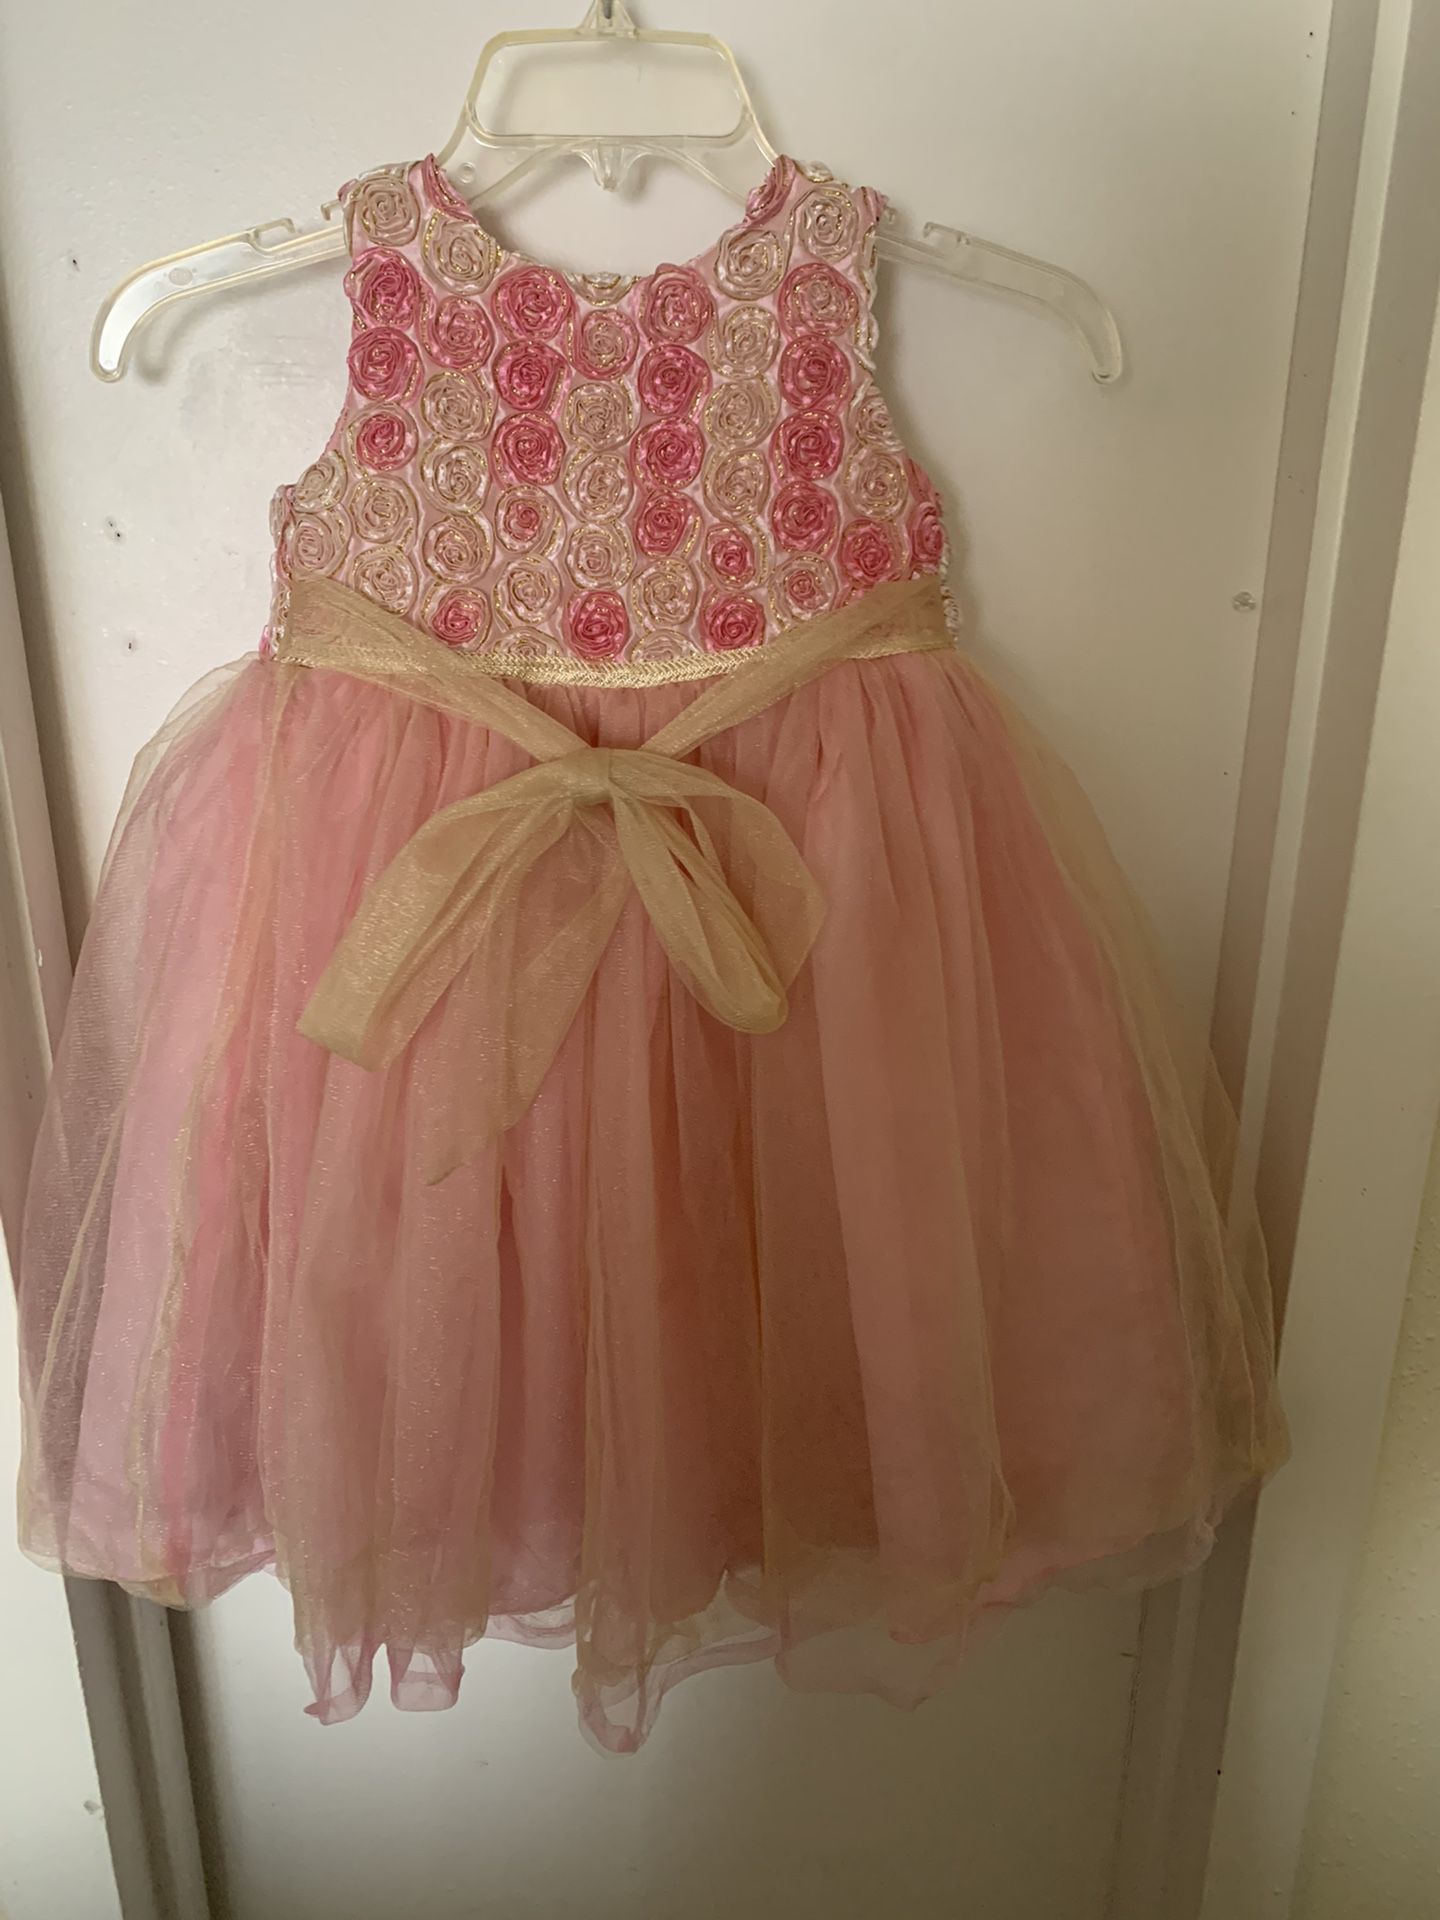 Toddler Elegant  Dress  Size  4